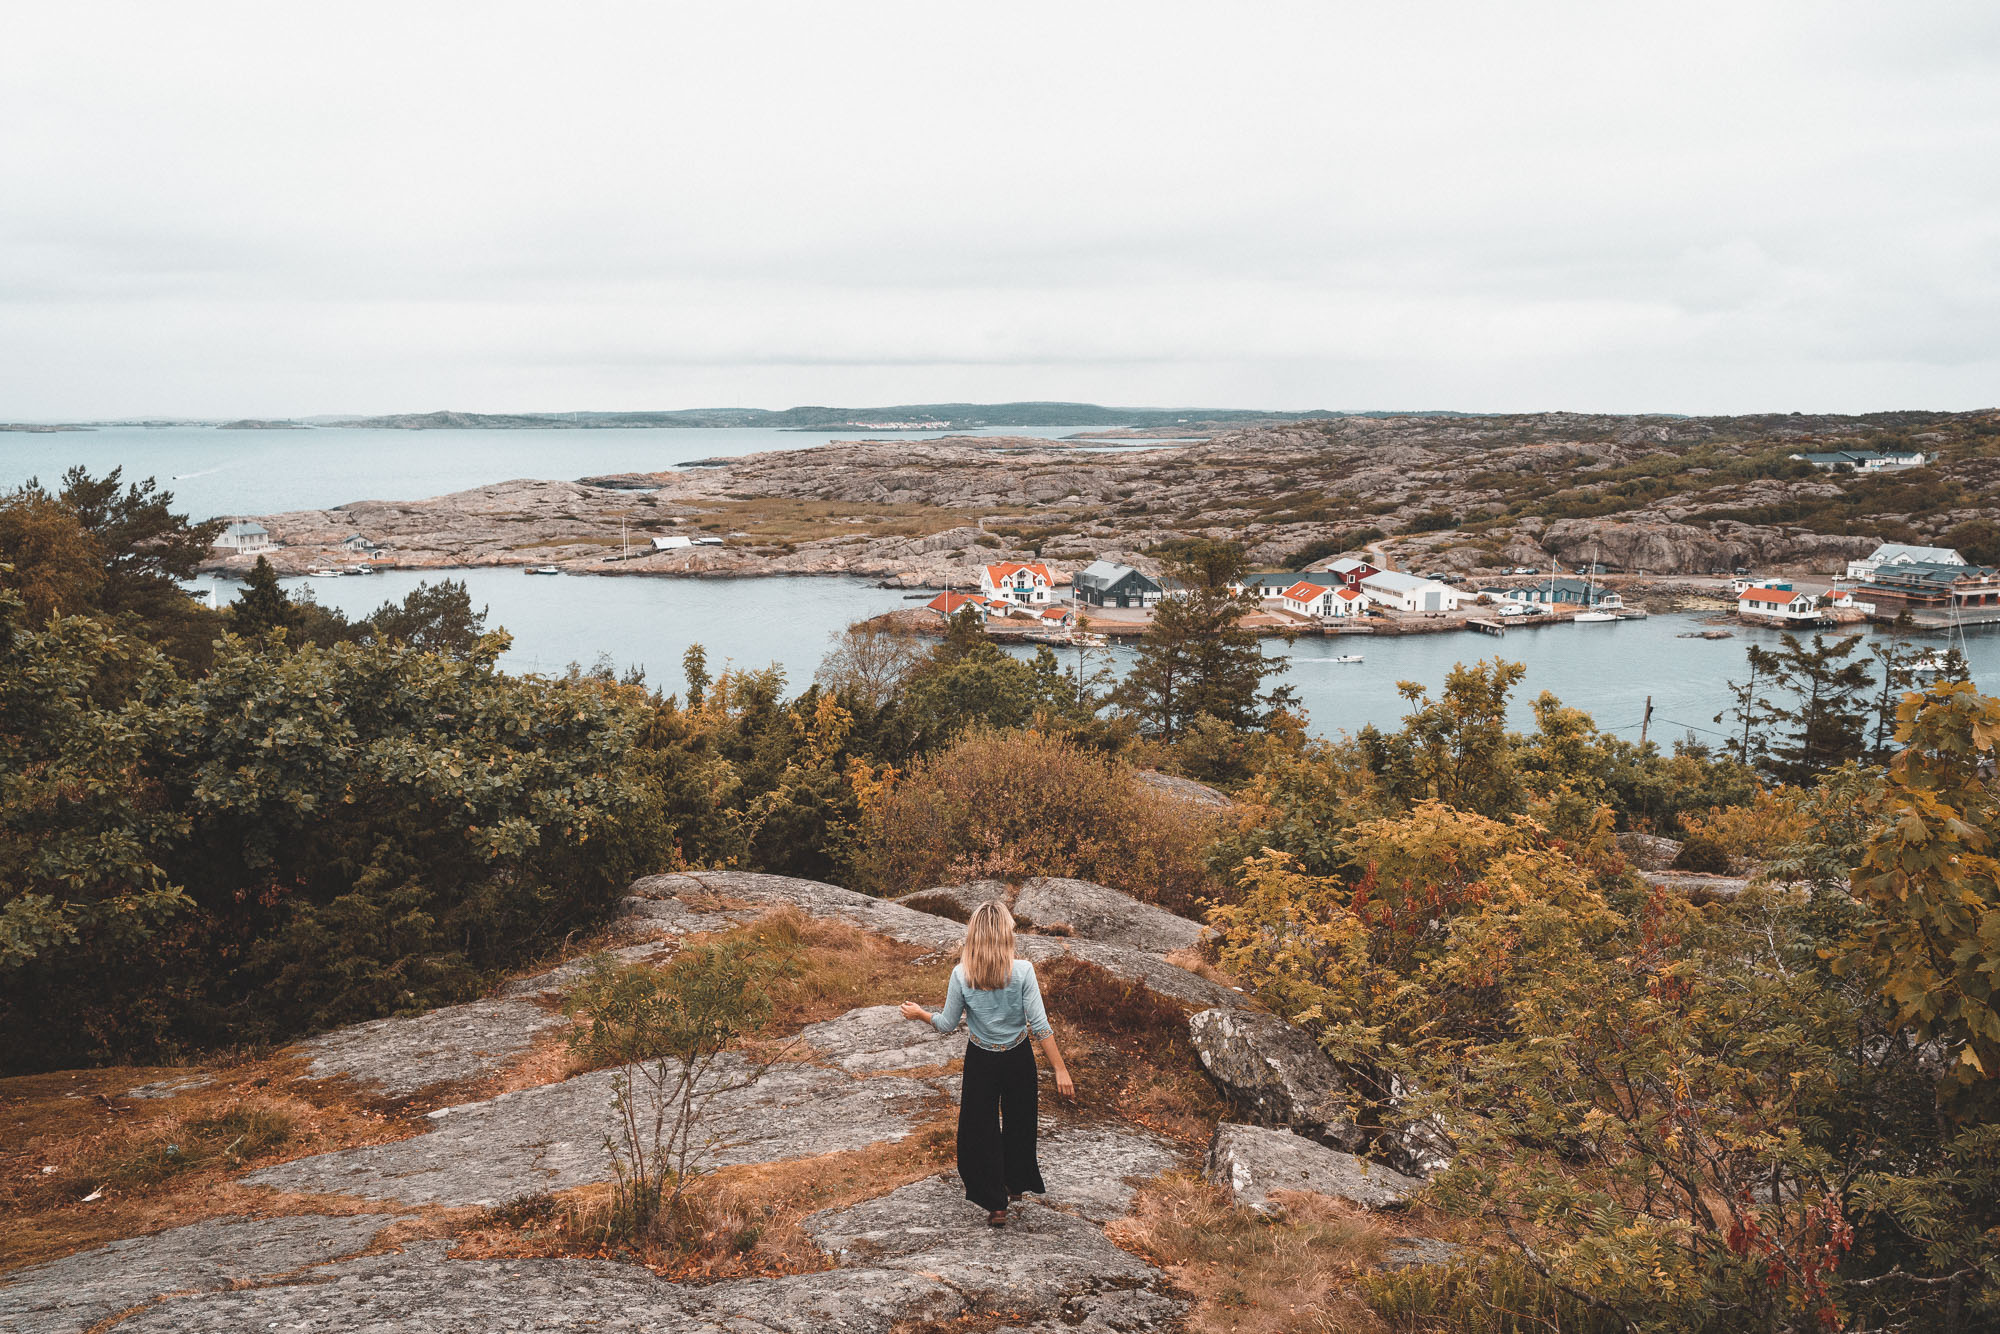 Marstrand island views of the Swedish coast | West Sweden Travel Guide via @finduslost